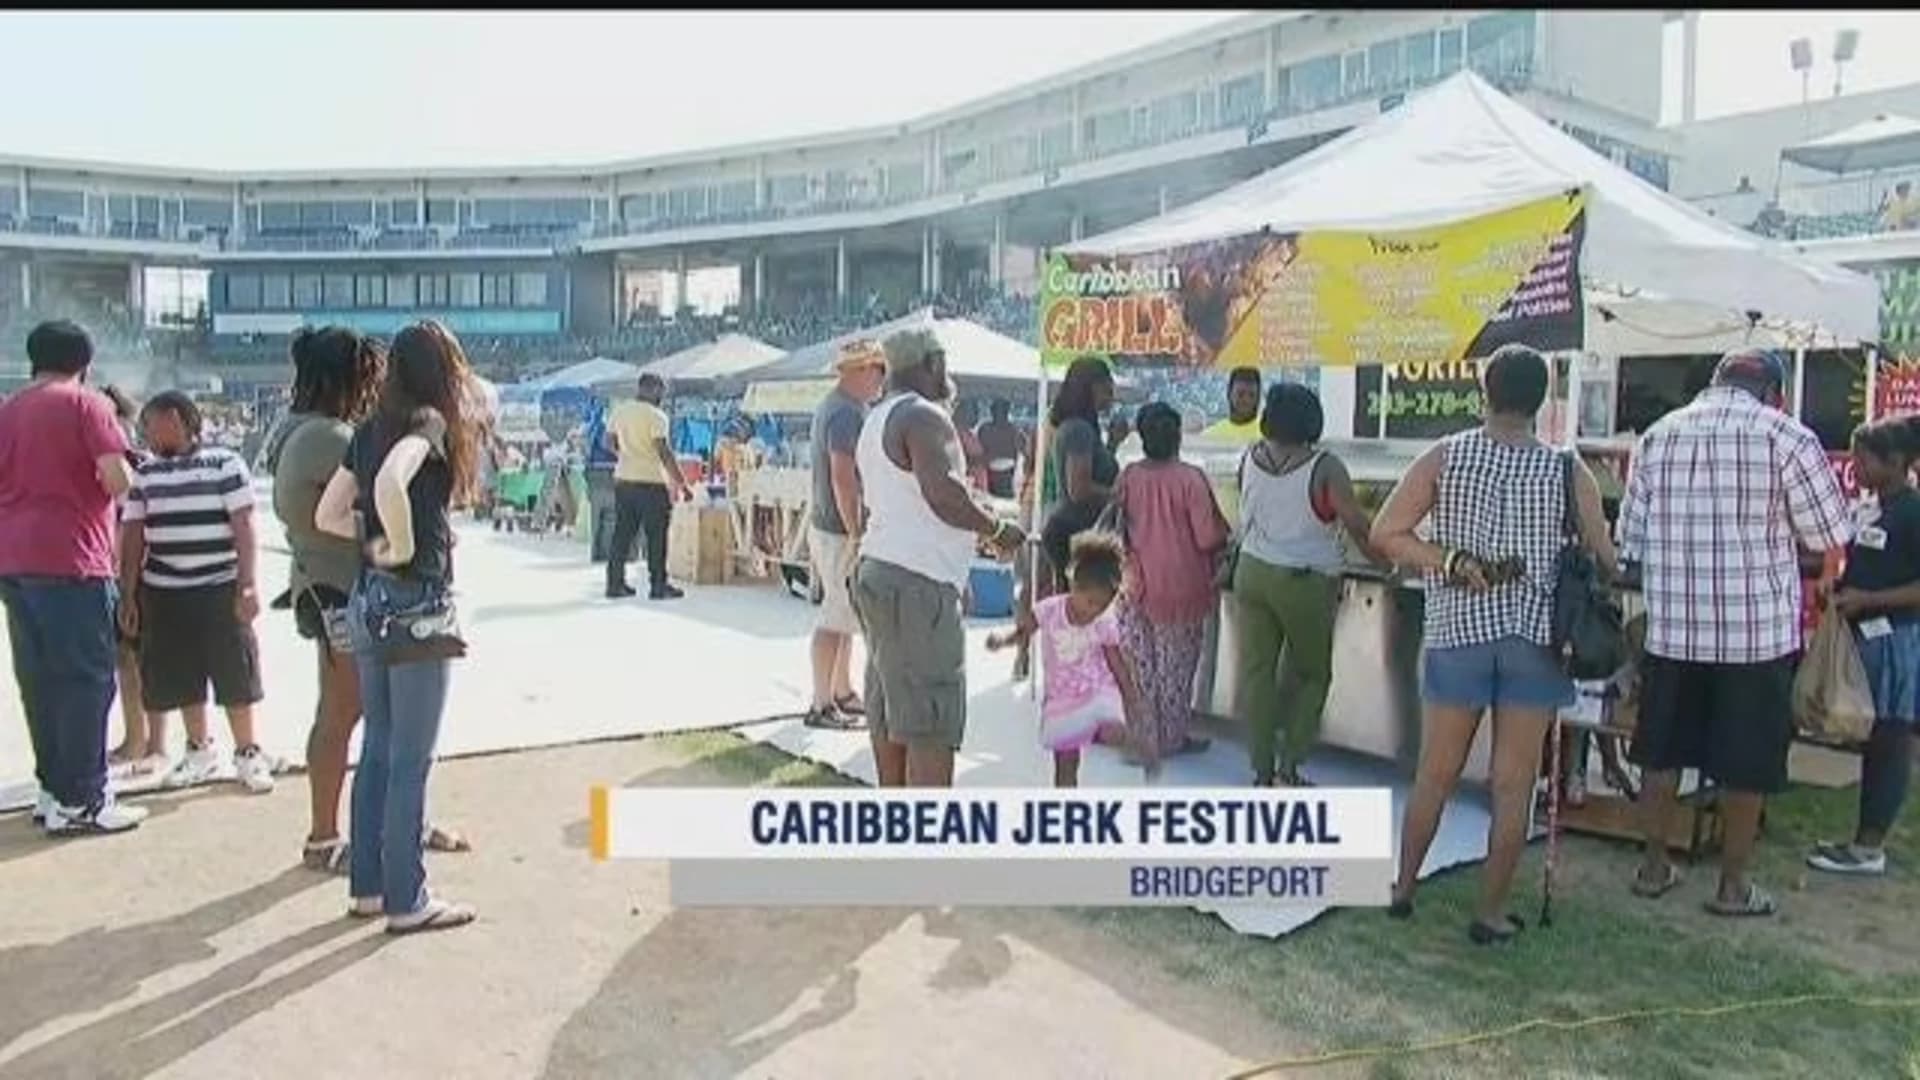 Annual Caribbean Jerk Festival is held in Bridgeport